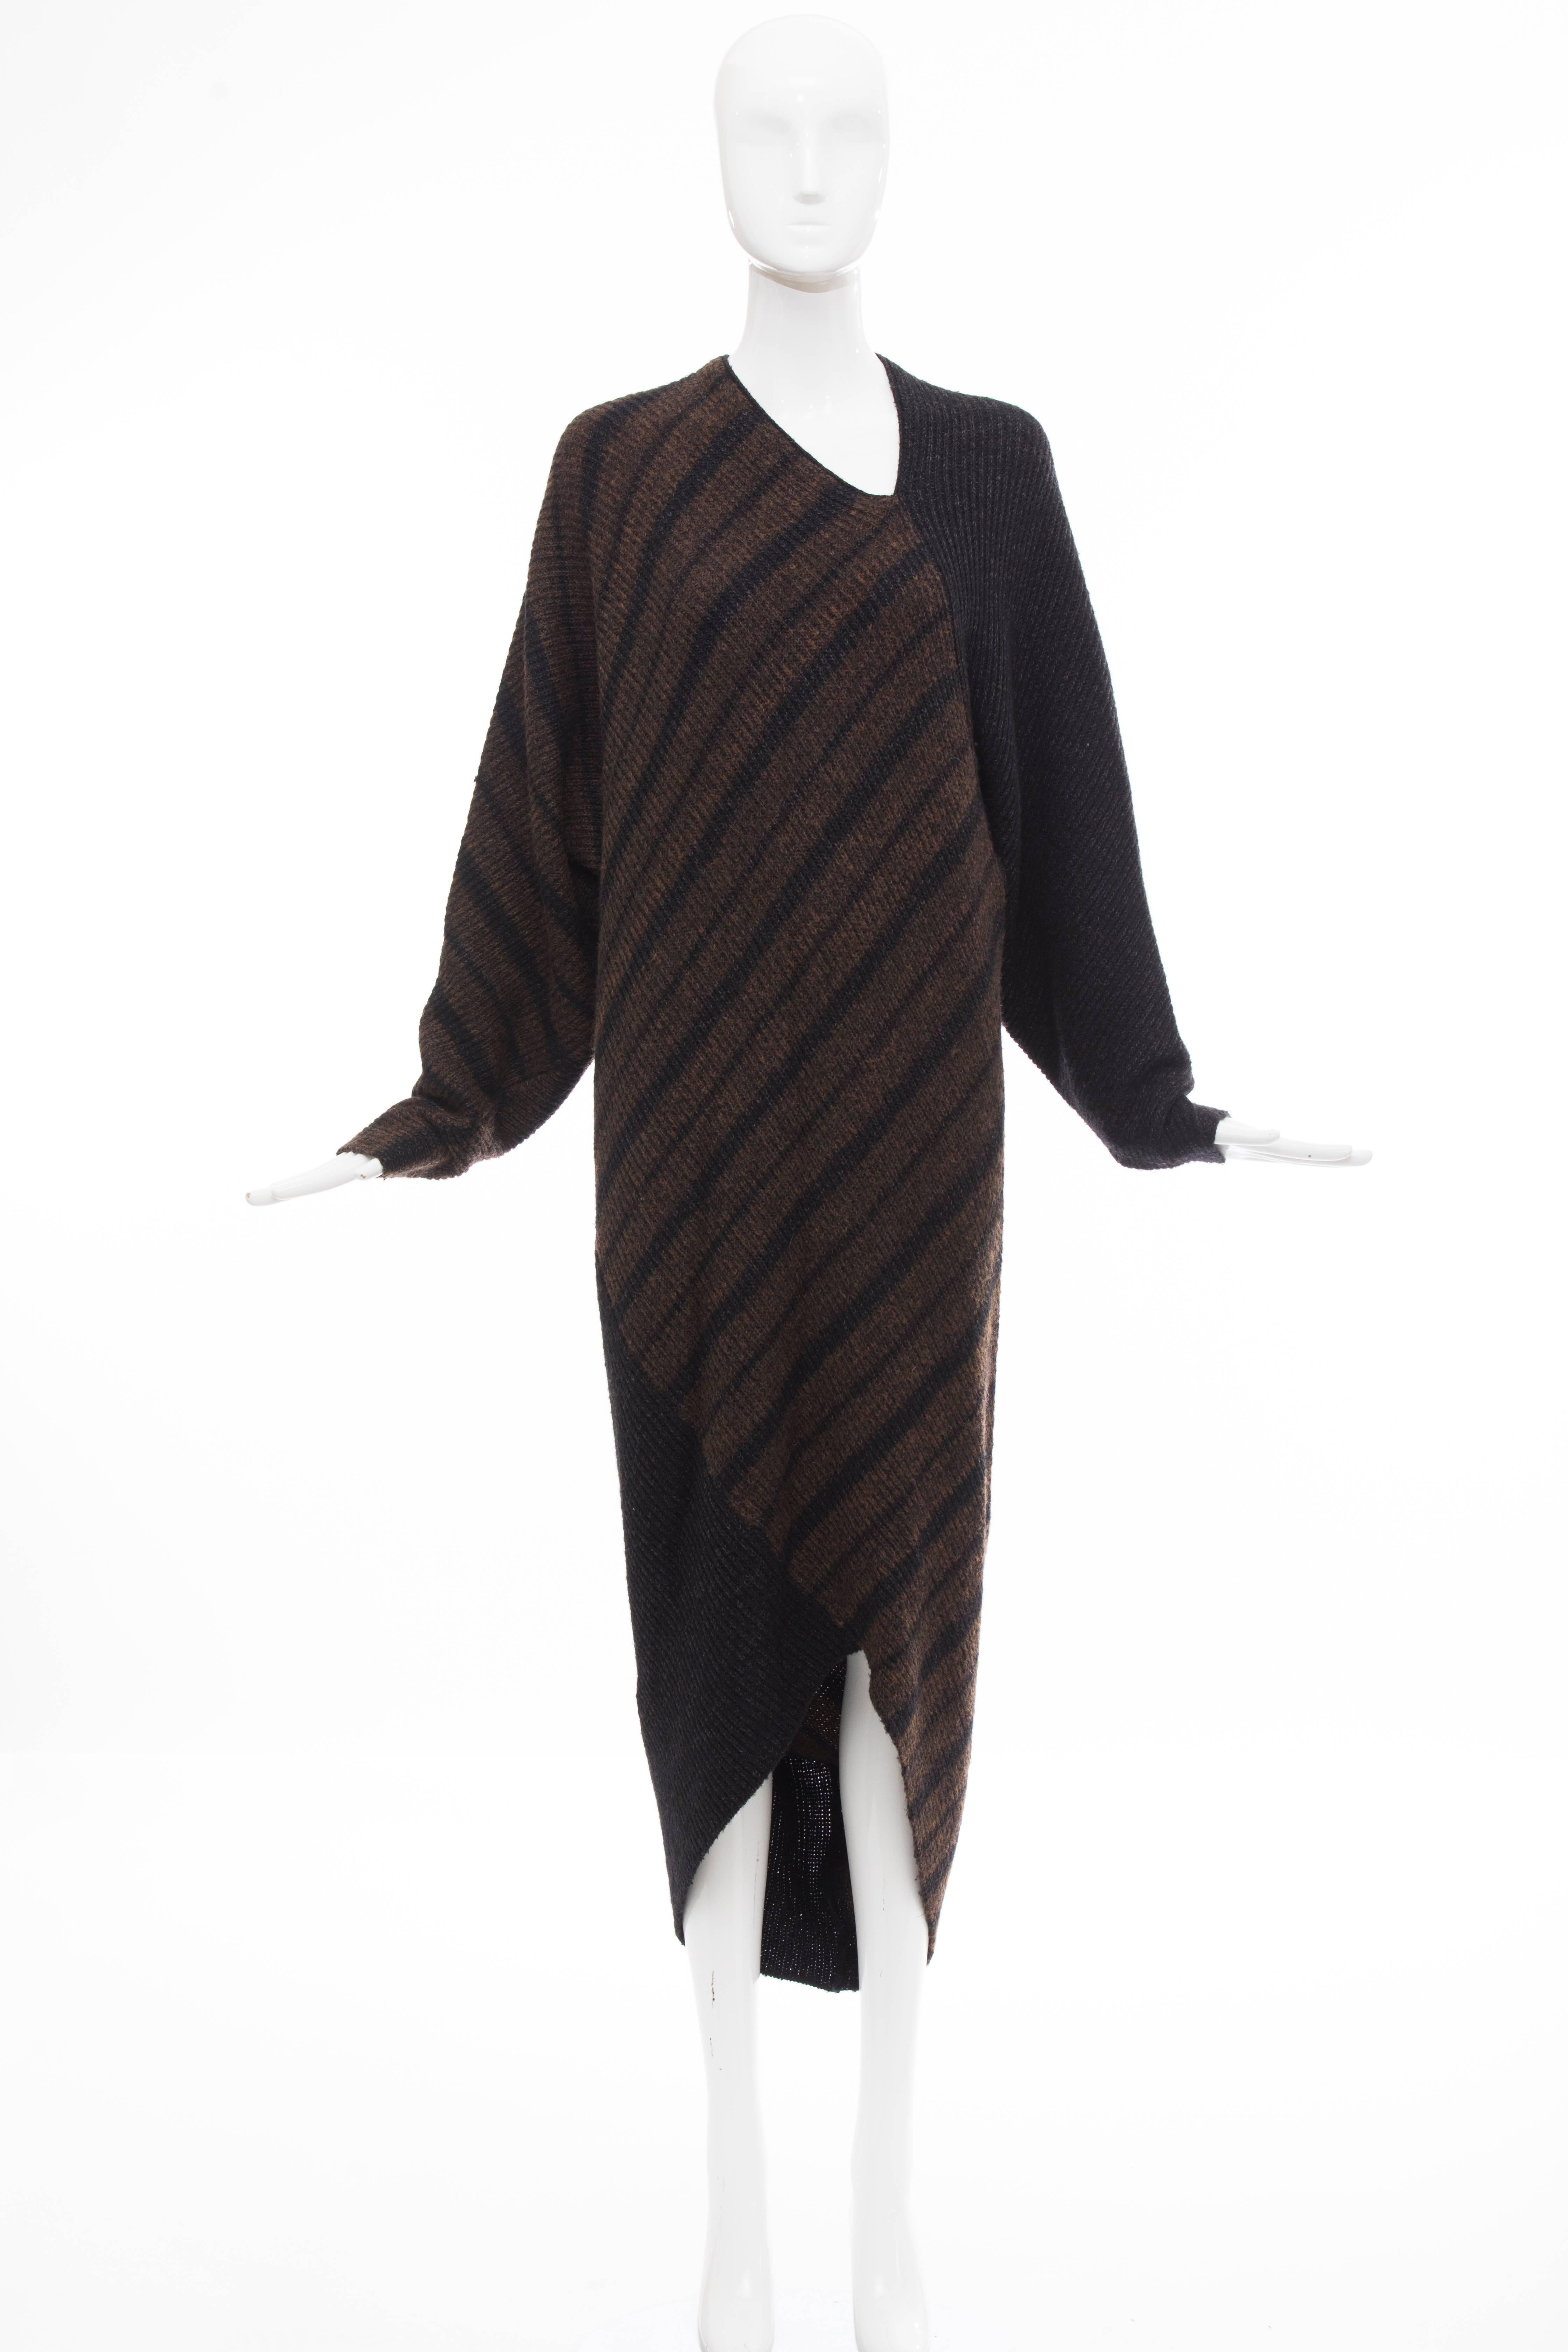 Issey Miyake Striped Wool Sweater Dress Cocoon Cardigan Ensemble, Circa ...